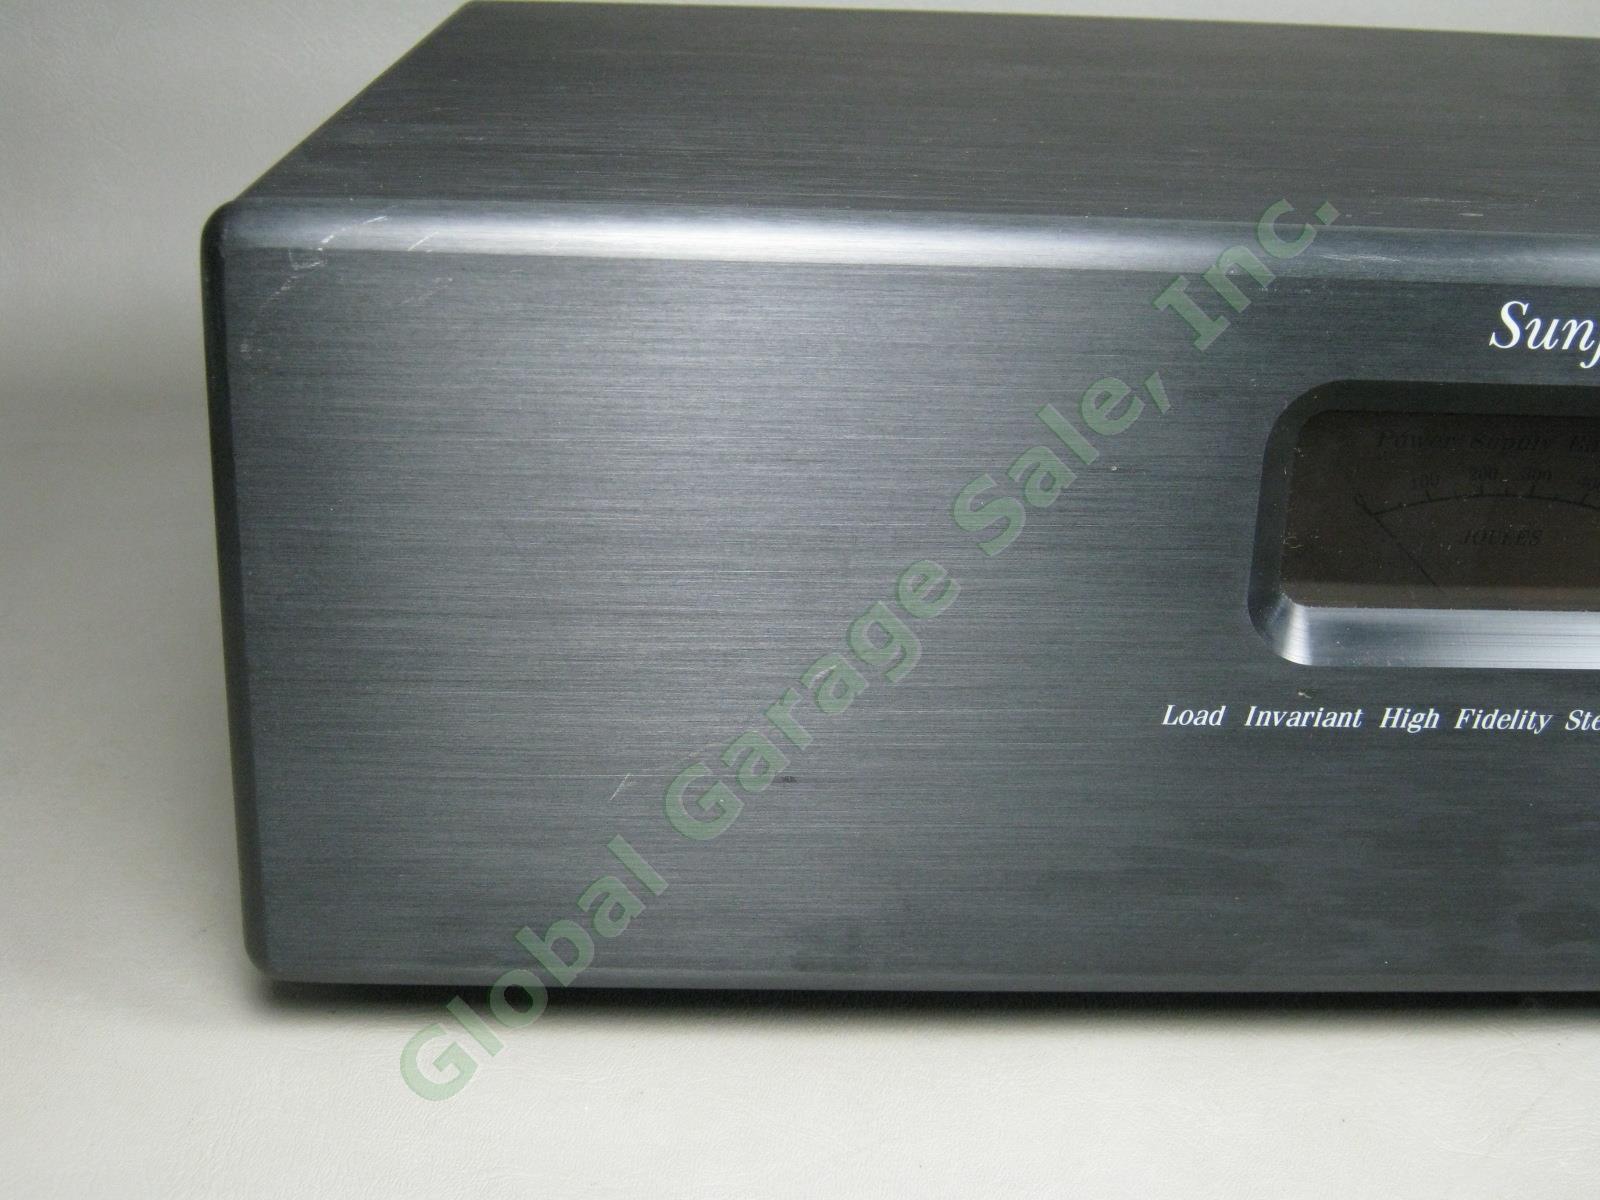 Bob Carver Sunfire 300 Load Invariant High Fidelity Stereo Power Amp Amplifier 8